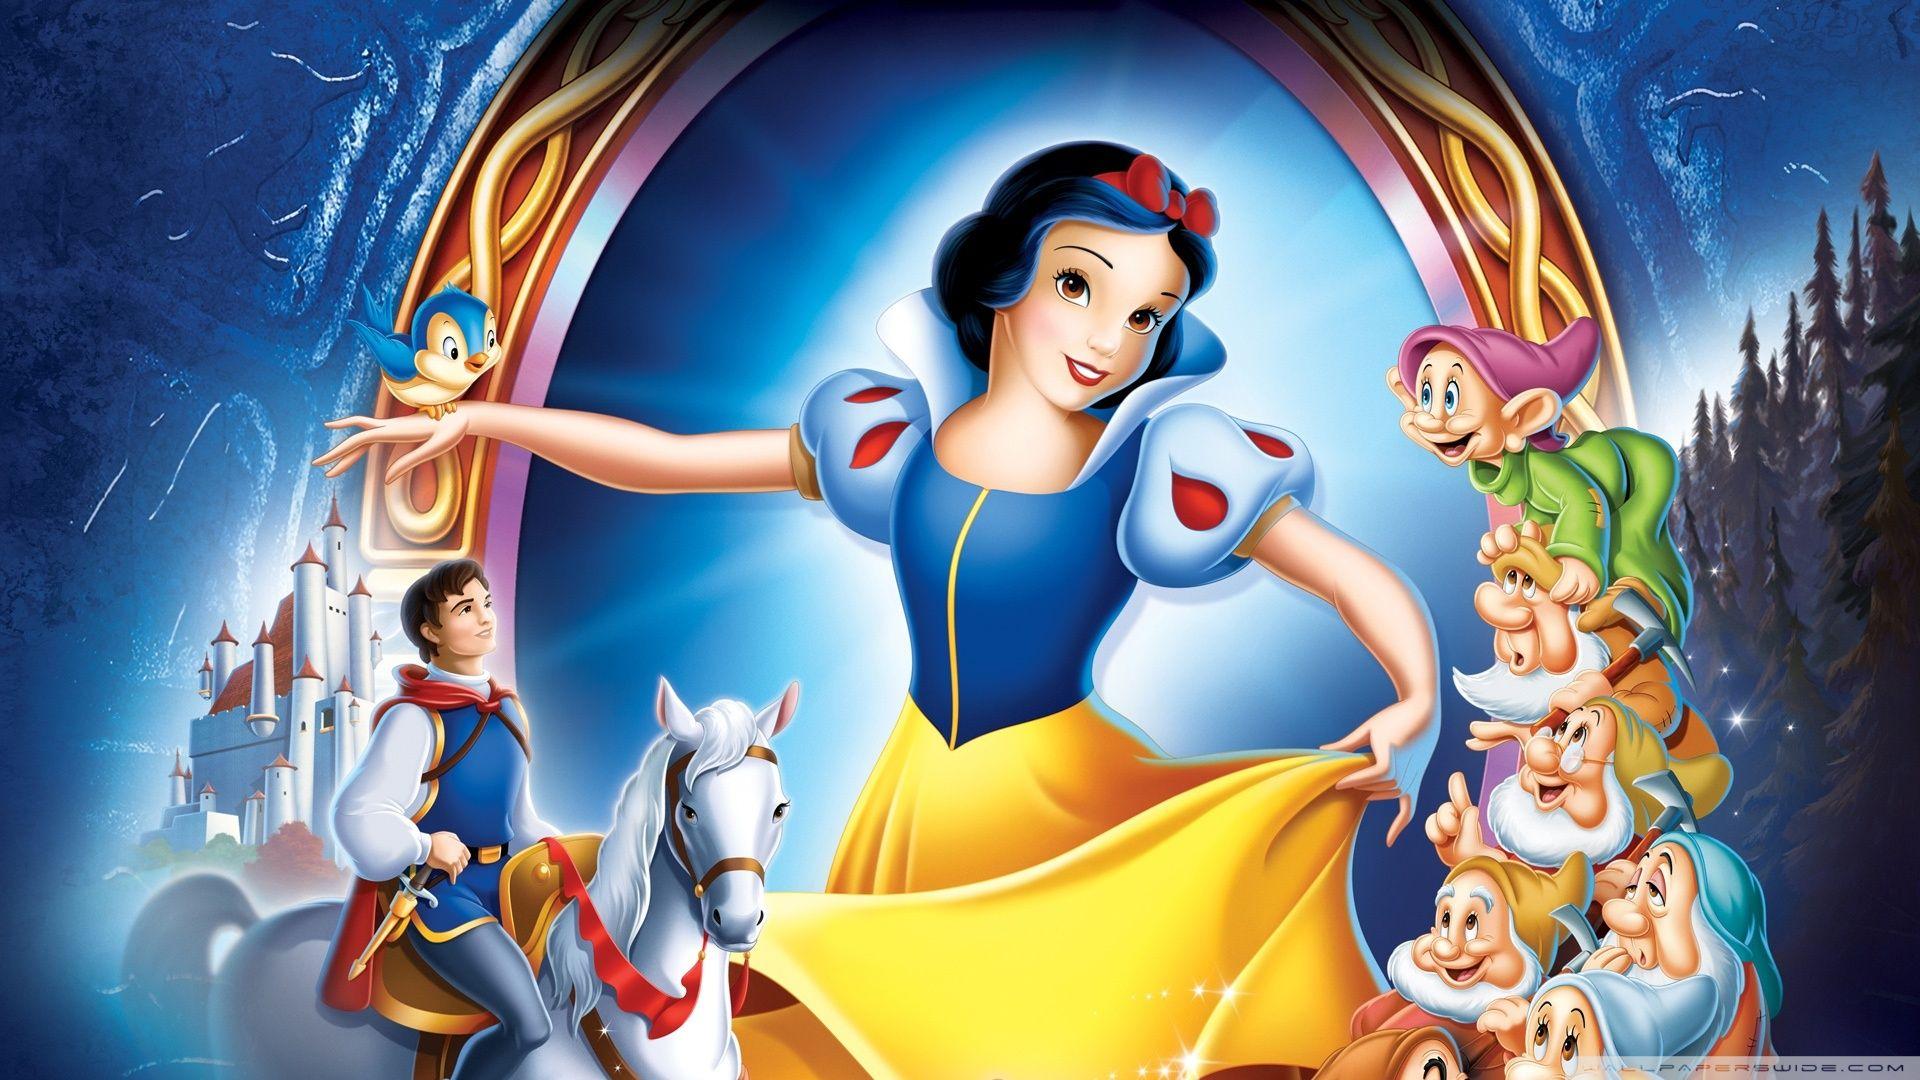 Disney Snow White Ultra HD Desktop .wallpaperwide.com